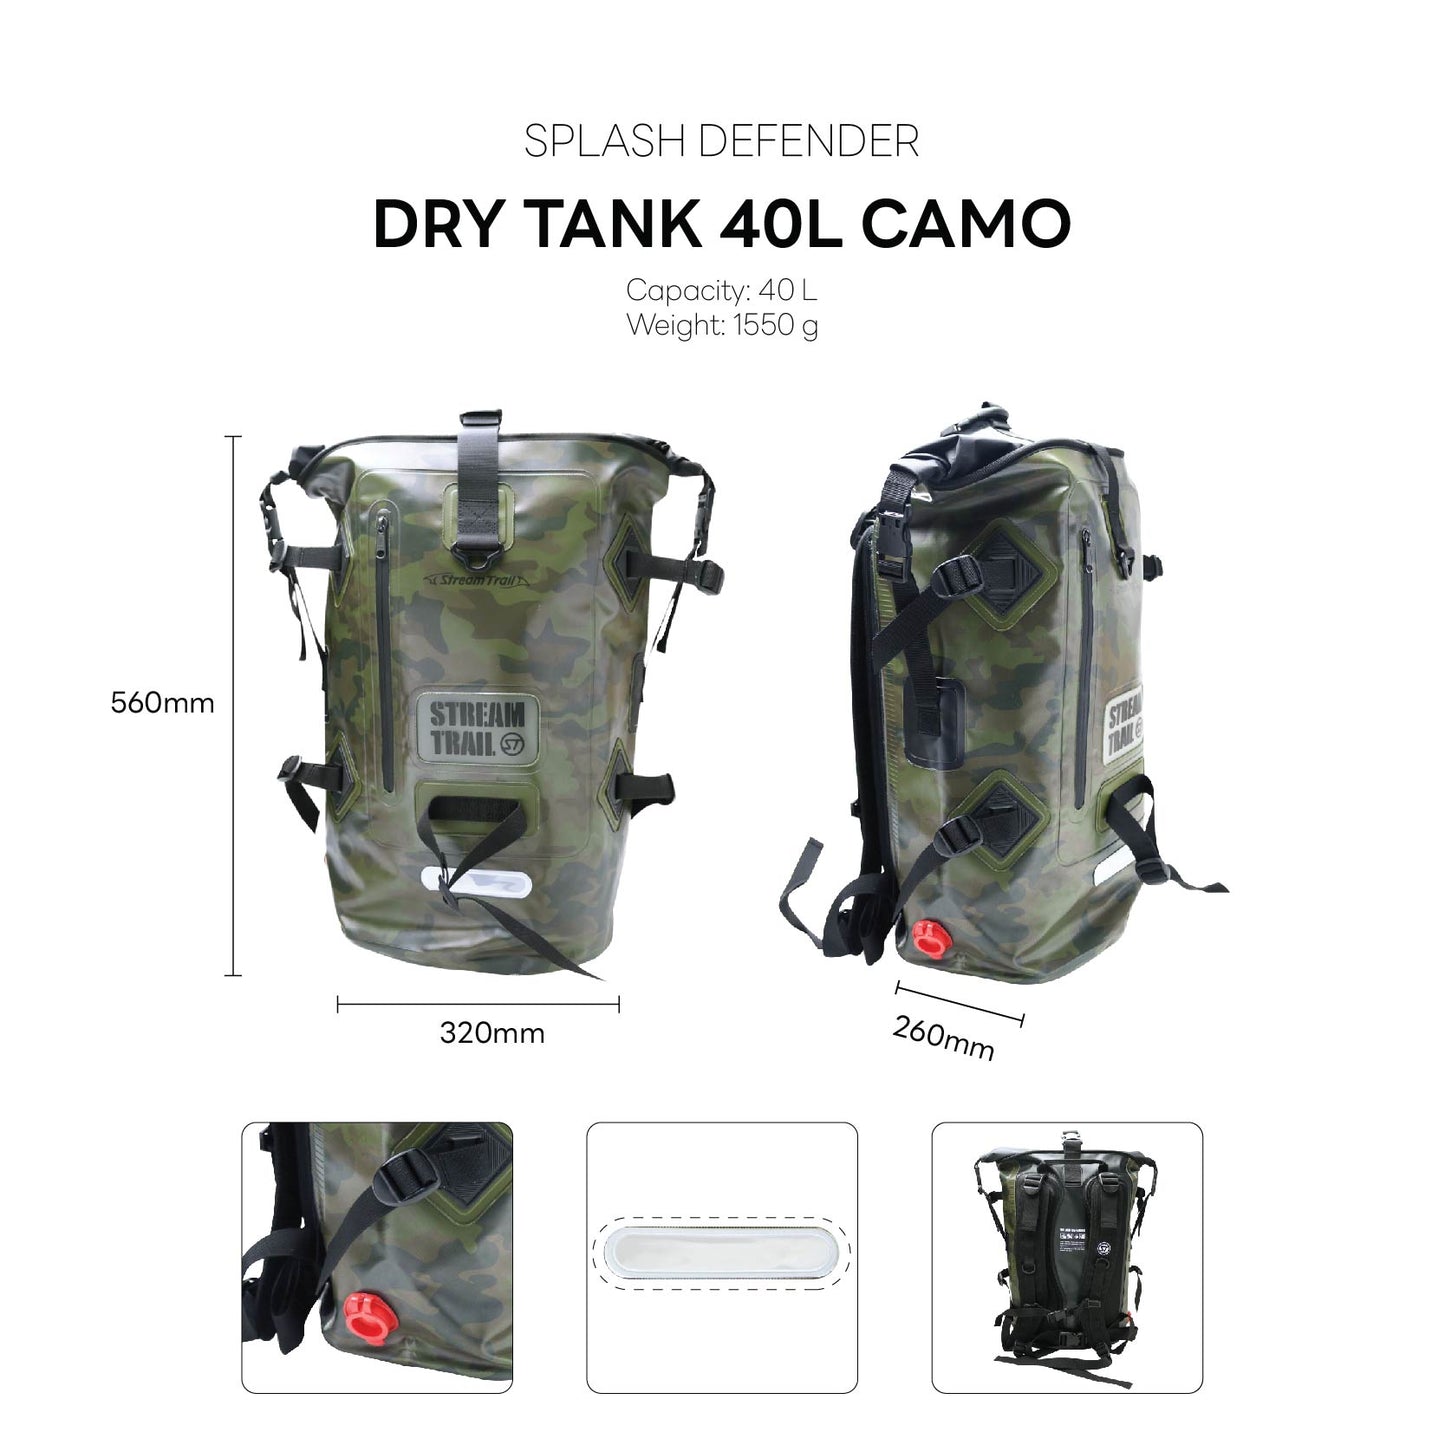 Splash Defender Dry Tank 40L Camo